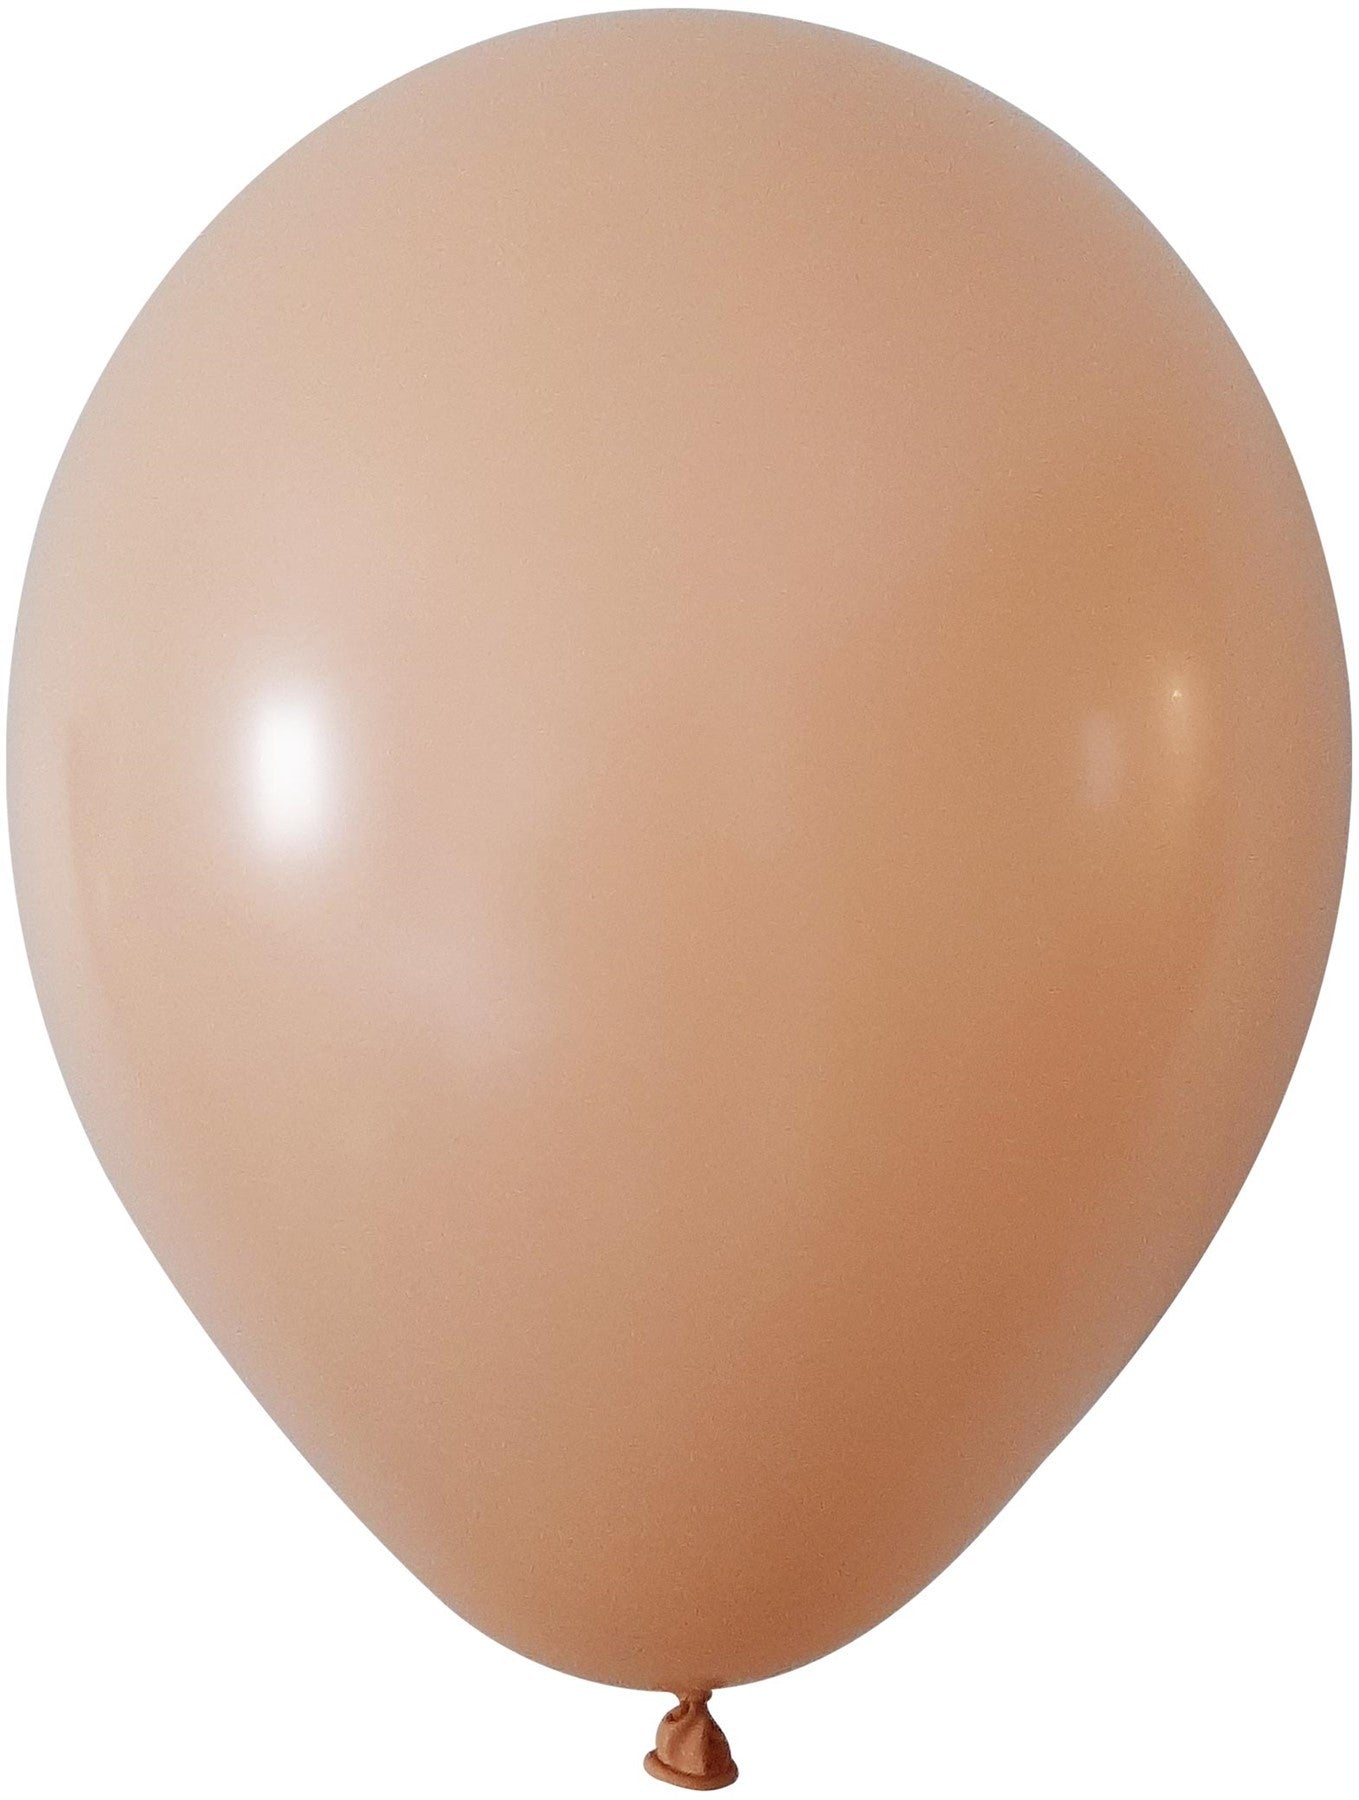 View Beige Latex Balloon 12 inch Pk 100 information